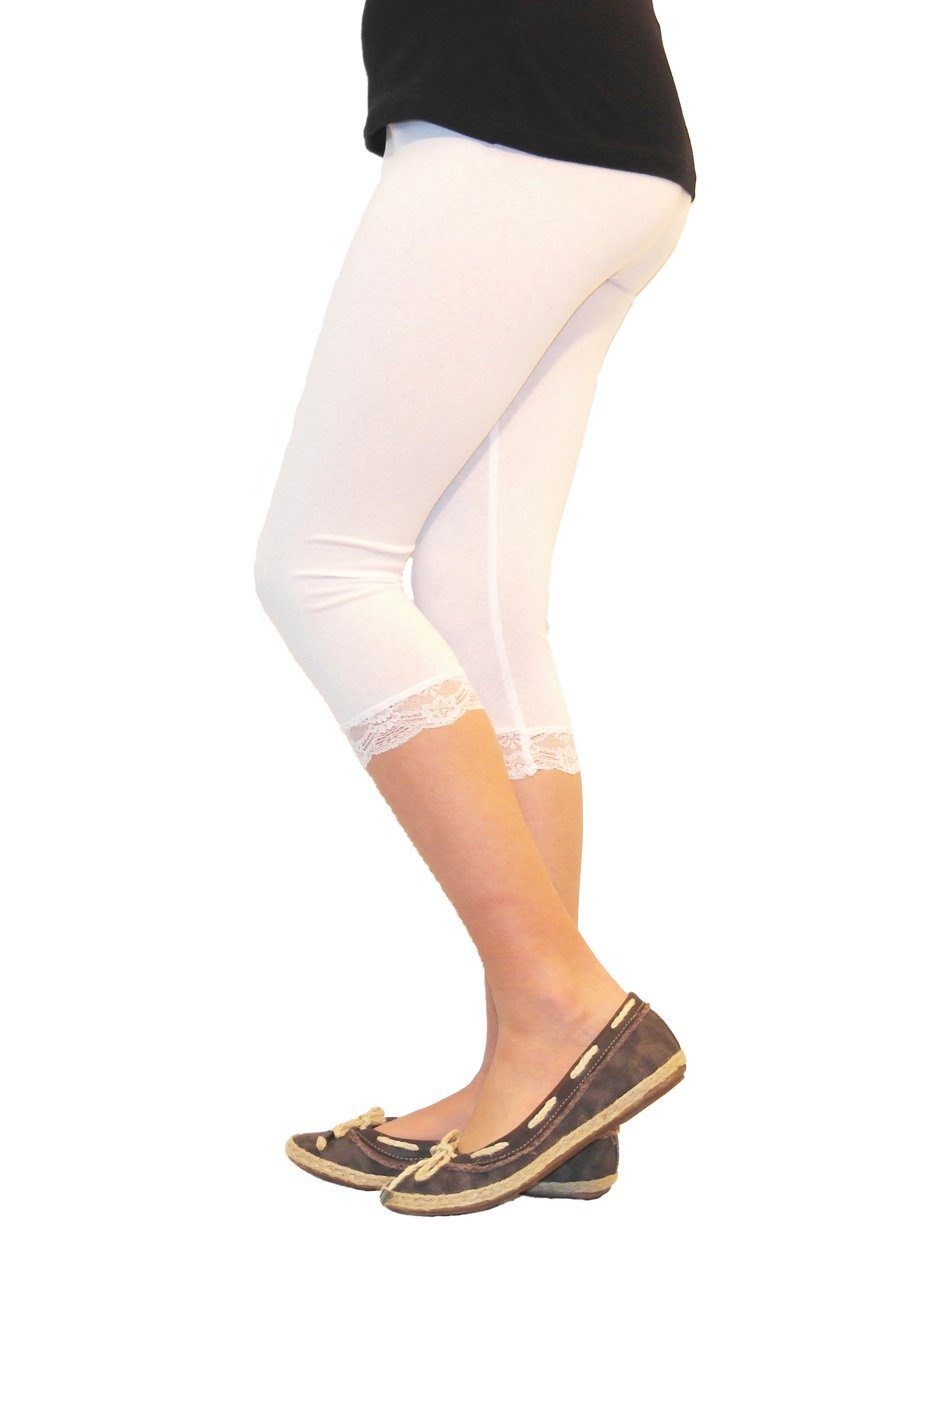 YESET Caprihose Mädchen Kinder Leggings Leggins Hose Capri 3/4 kurz Spitze Baumwolle W Weiss | Trainingshosen